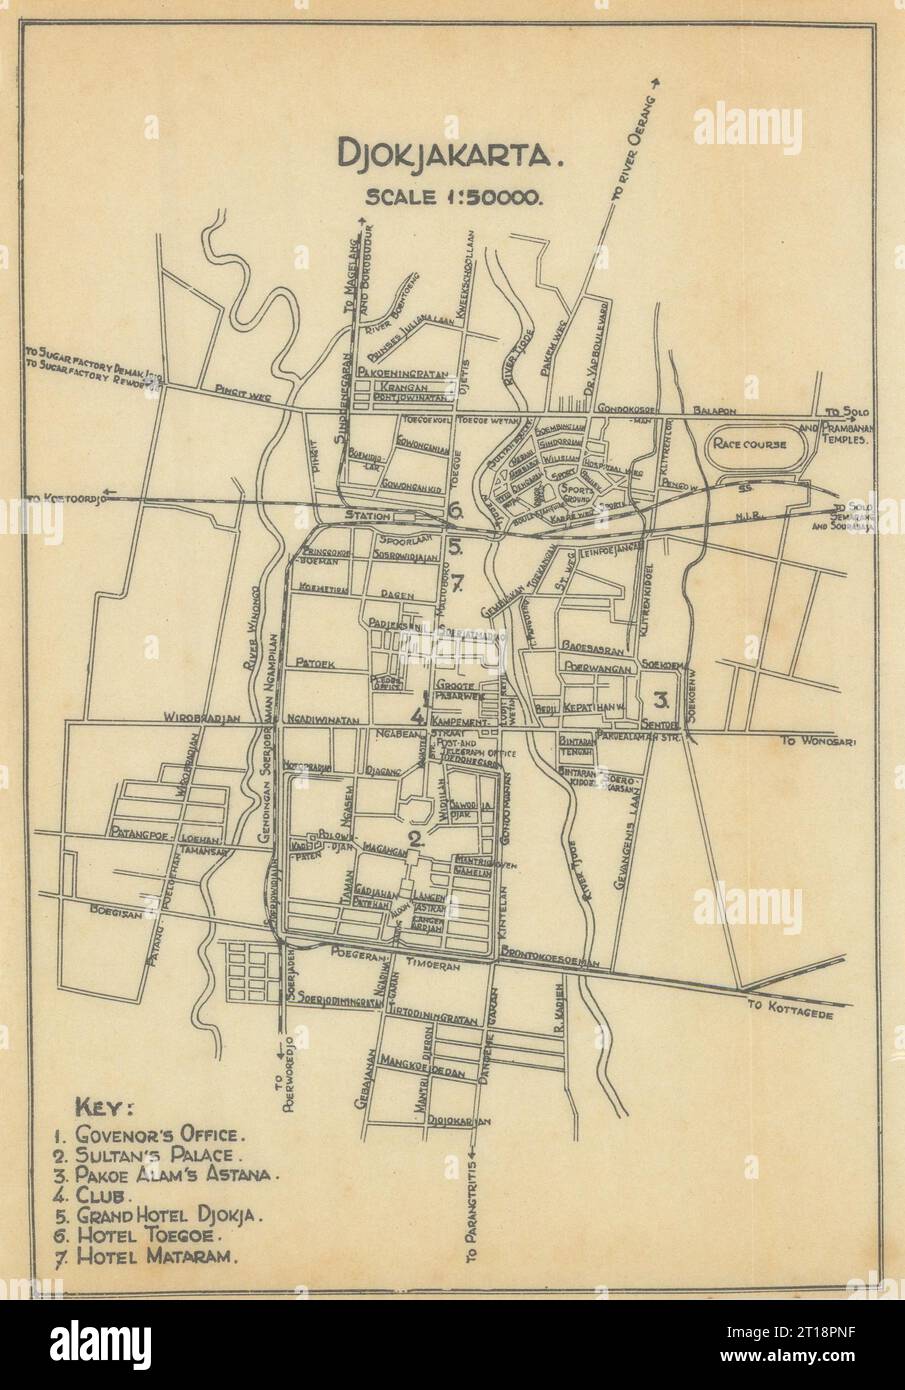 Djokjakarta. Stadtplan Yogyakarta, Java, Indonesien. VAN STOCKUM 1930 alte Karte Stockfoto